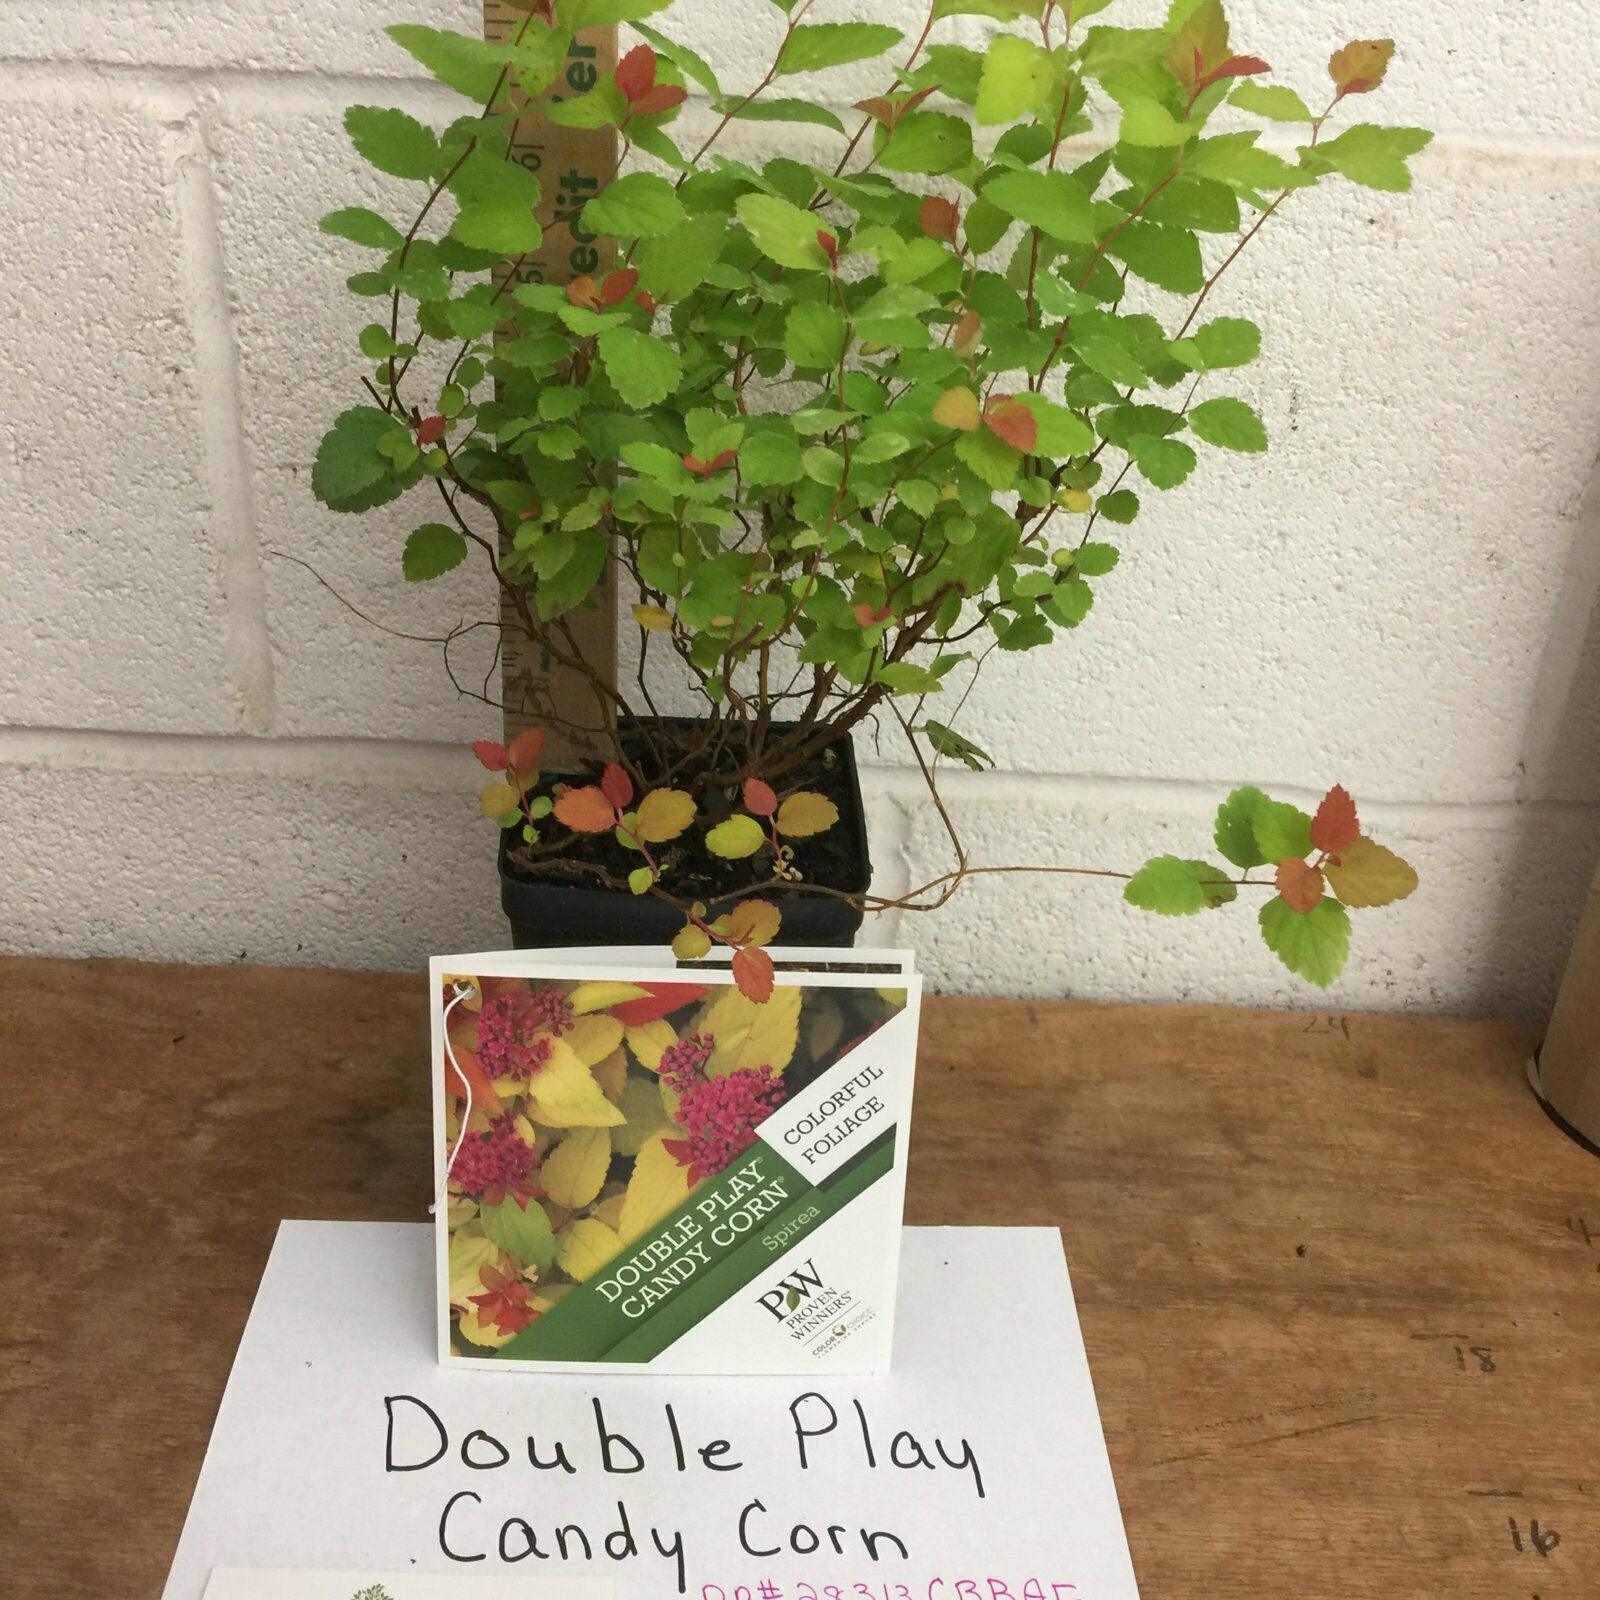 2 Double Play Candy Corn Spirea Shrubs - Live Plants - 4-10" Tall - Quart Pots - The Nursery Center